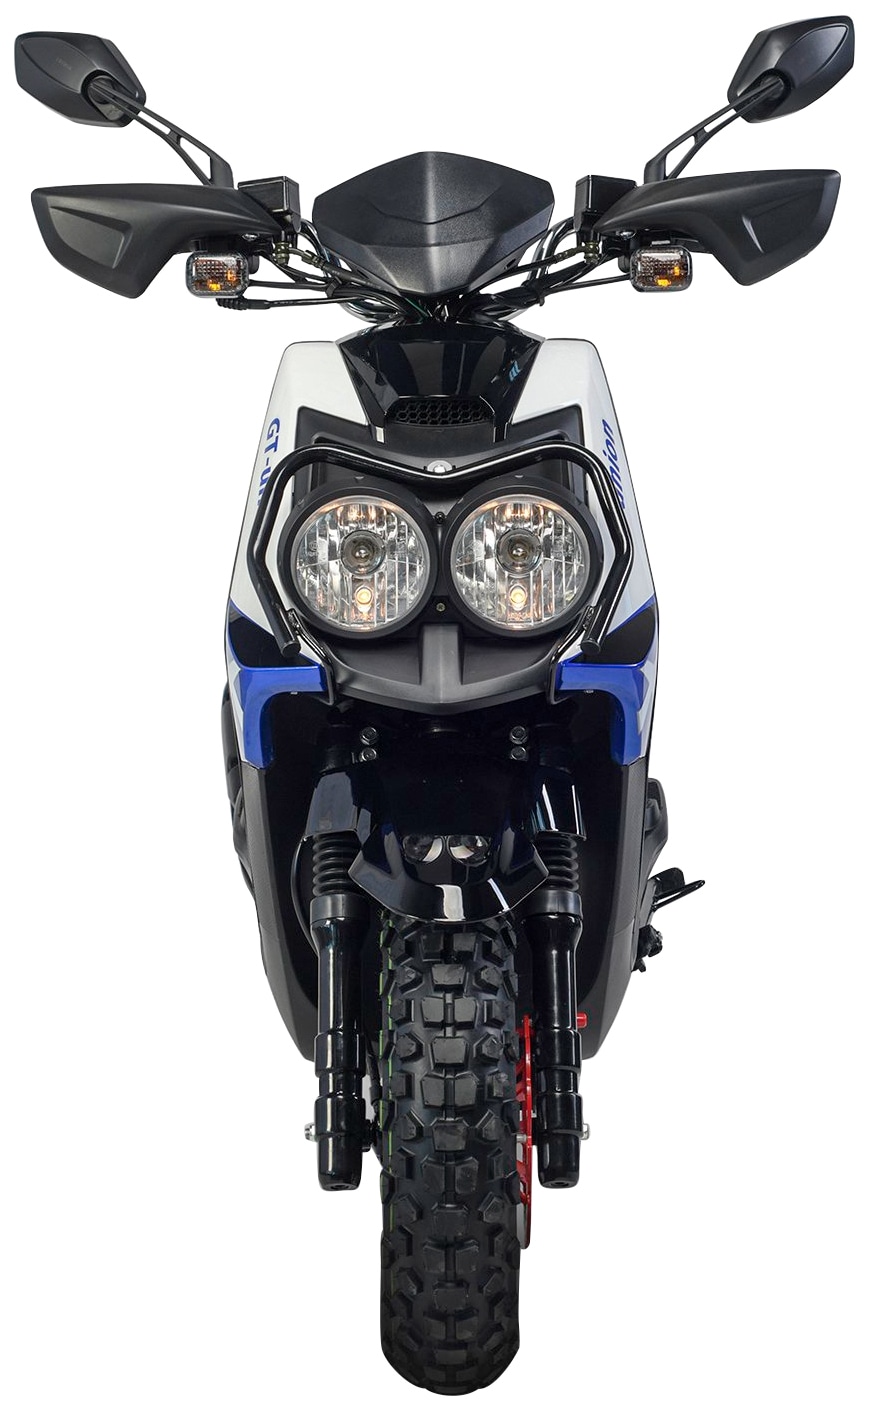 jetzt UNION cm³, Euro »PX Cross-Concept«, %Sale 5, im km/h, 45 Motorroller 55 3 50 GT PS